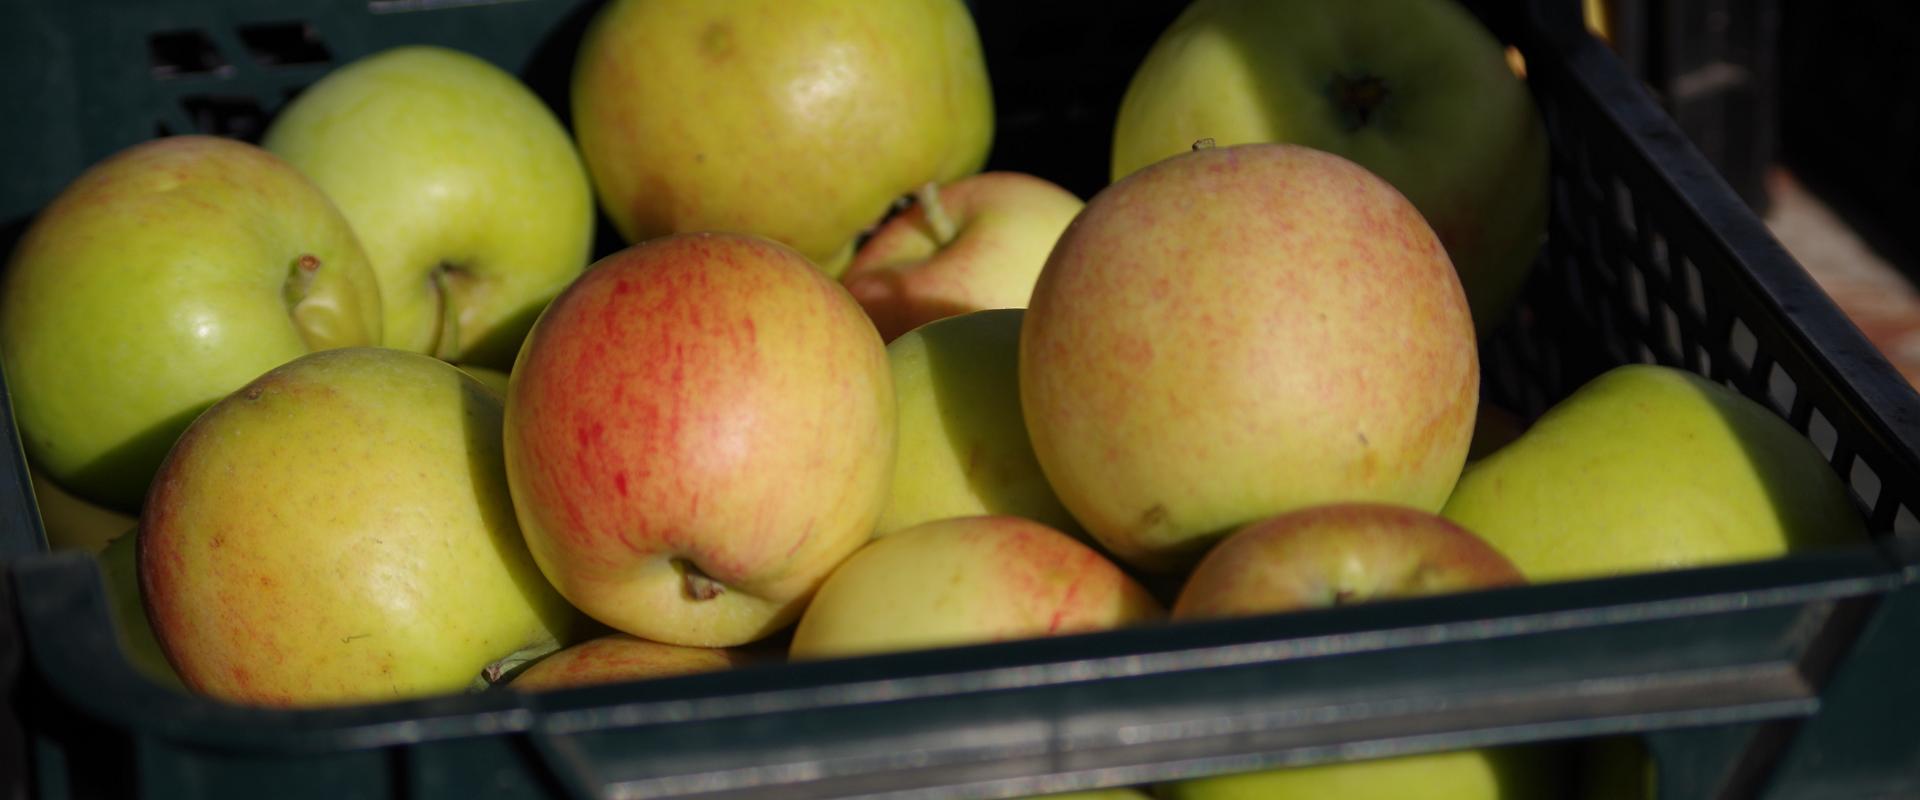 Tartu Market, Estonian apples